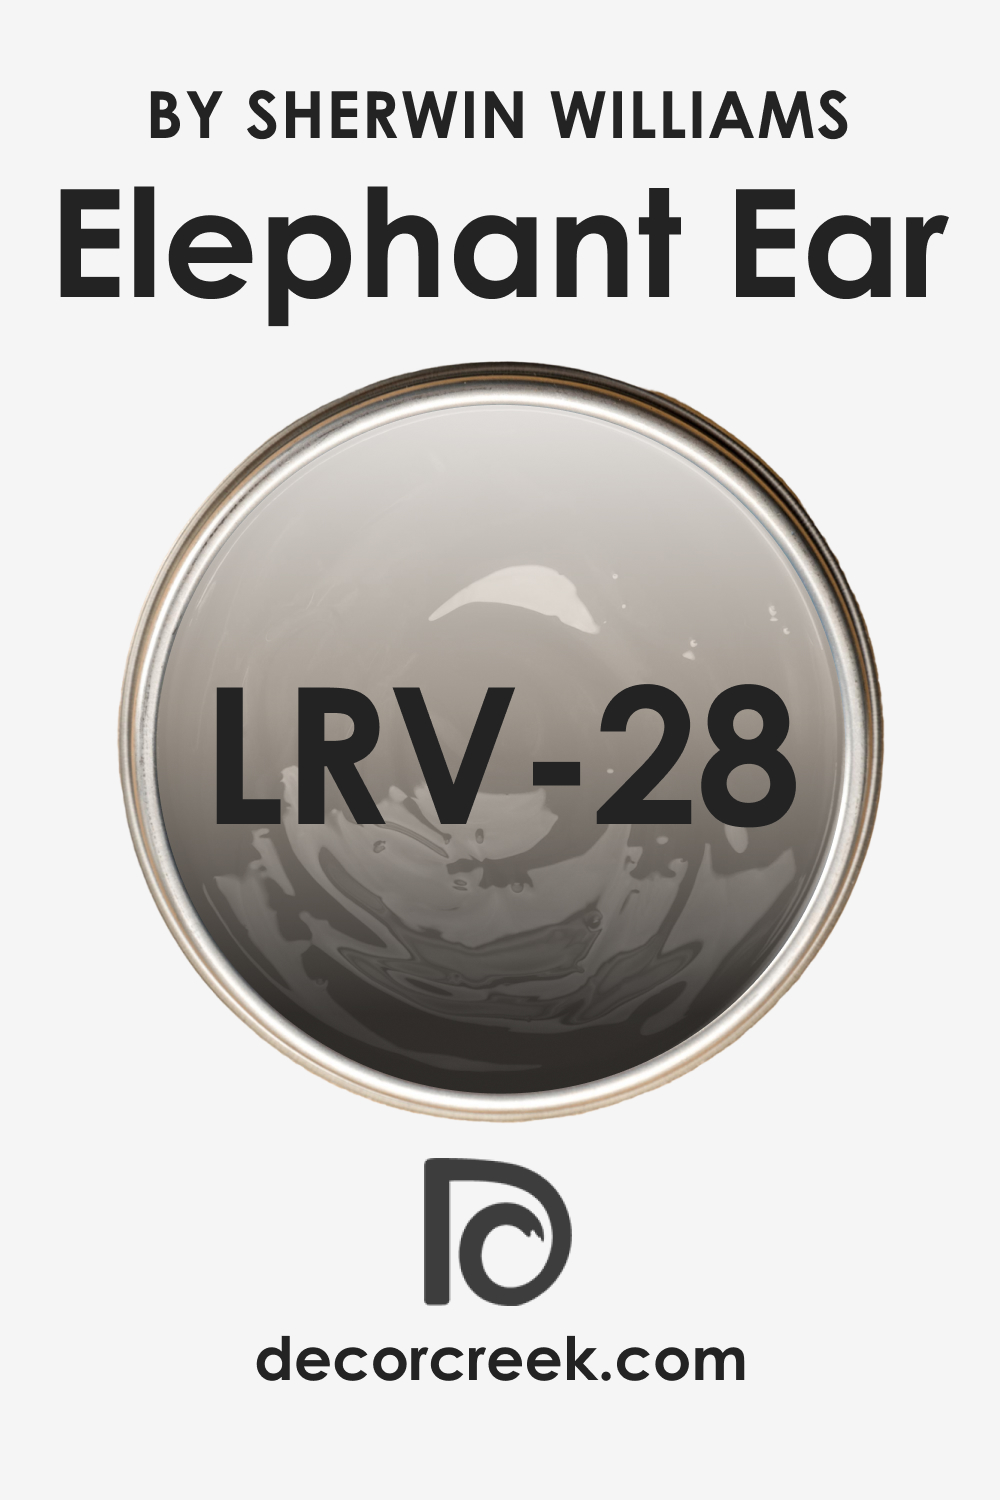 LRV of SW 9168 Elephant Ear